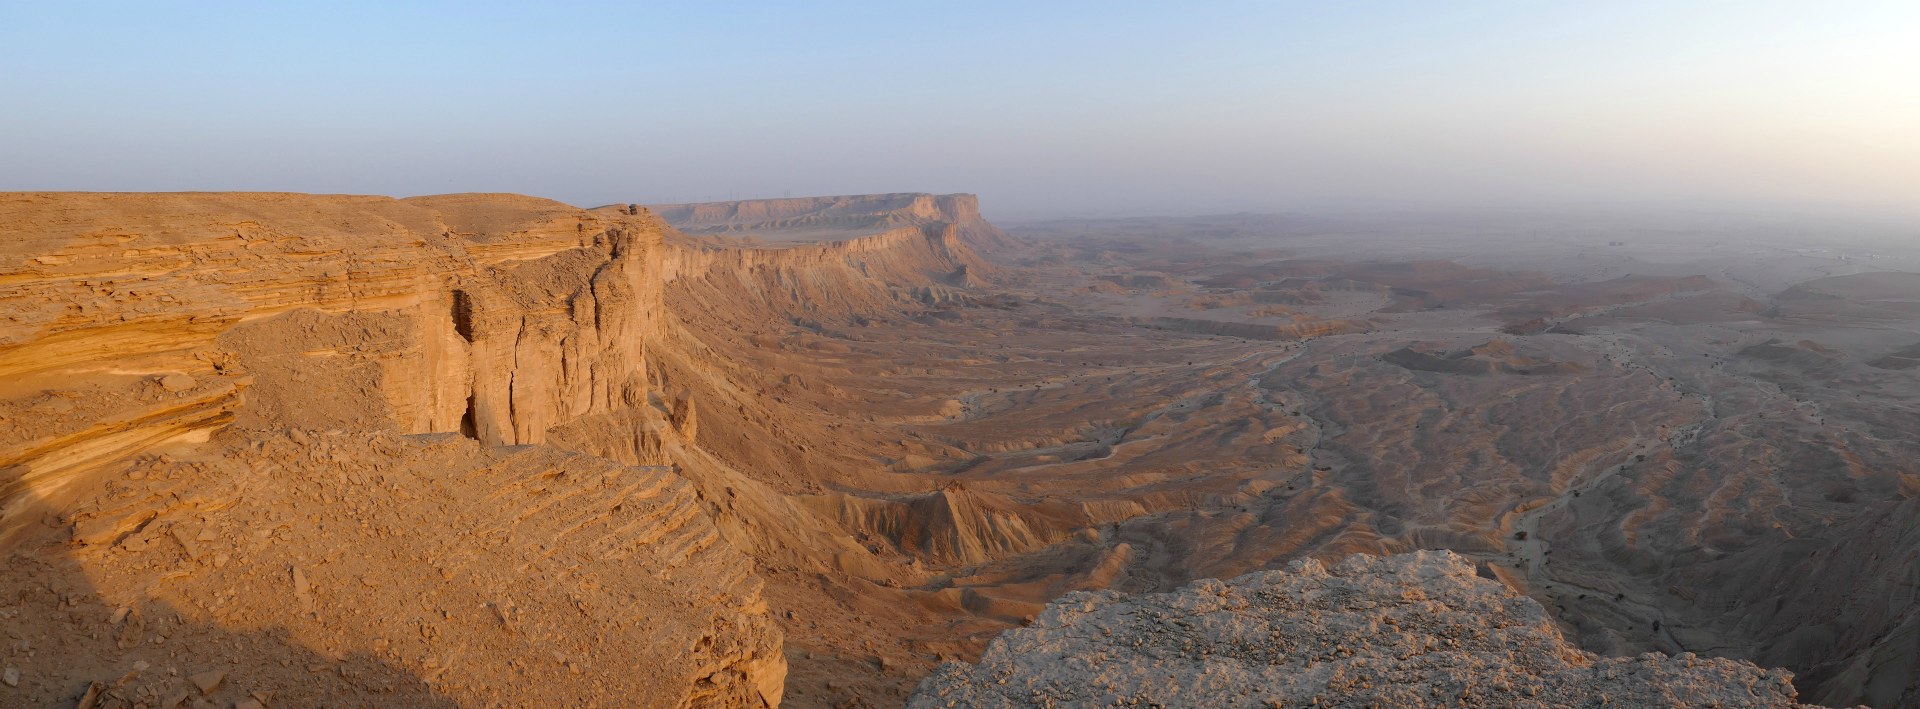 The Edge of the World west of Riyadh